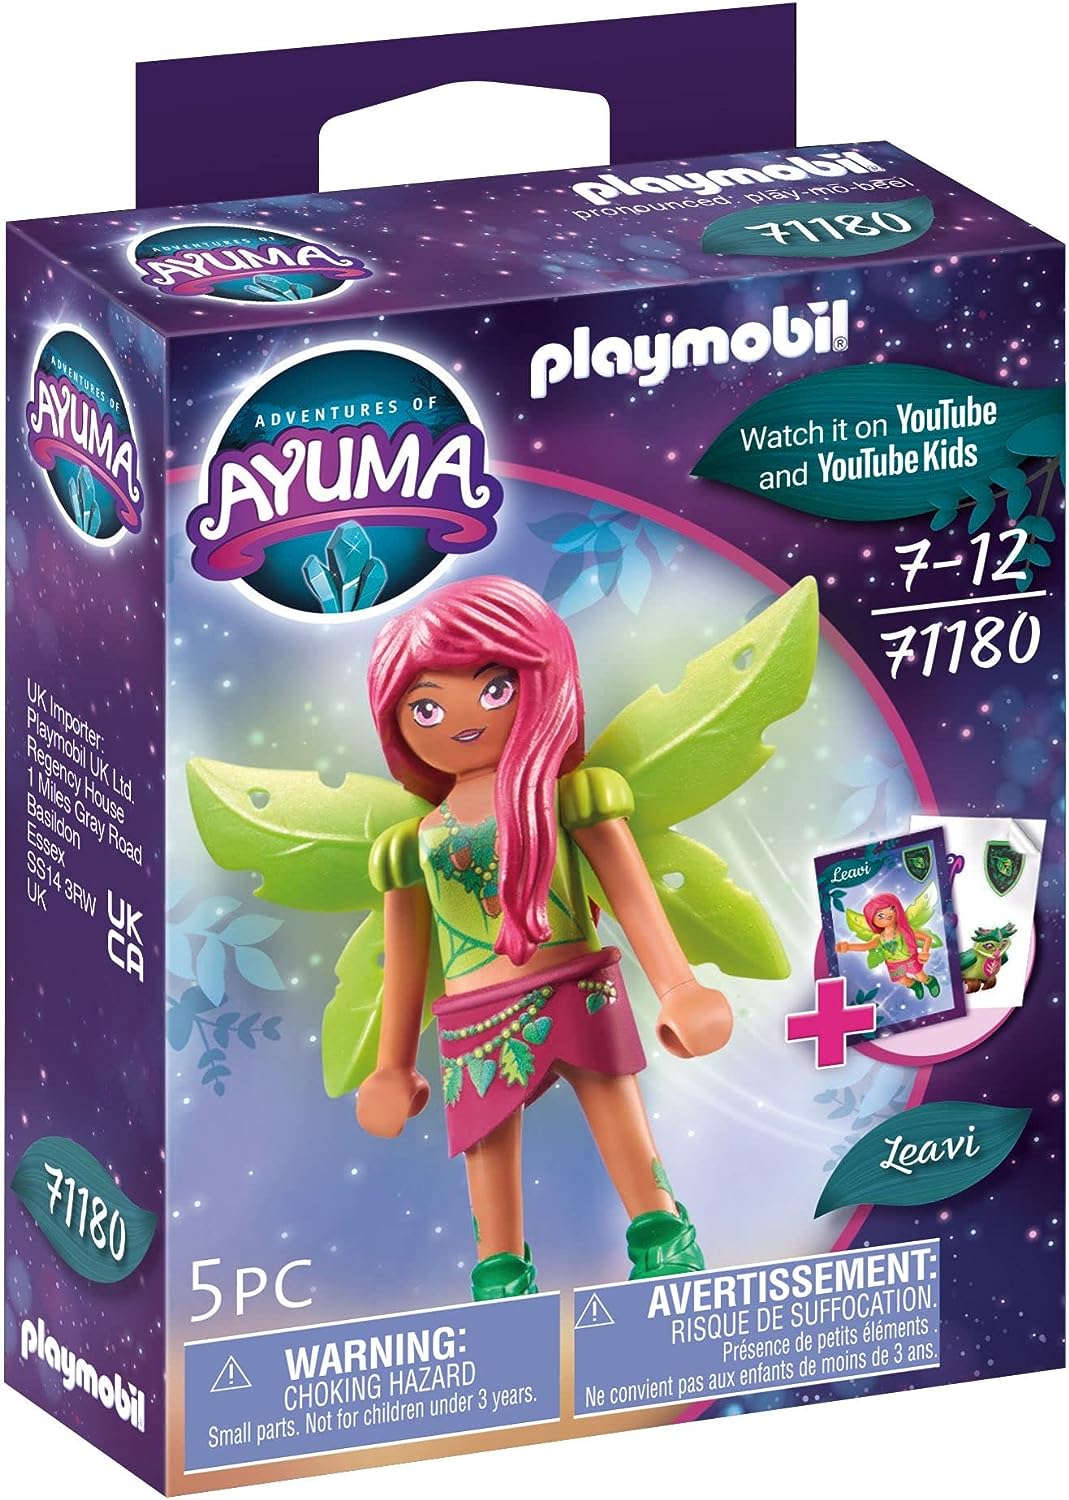 Playmobil 71180 Adventures of Ayuma - Forest FAiry Leavi, fAiries, Mystical Adventures, Fun Imaginative Role-Play, Playset Suitable for Children